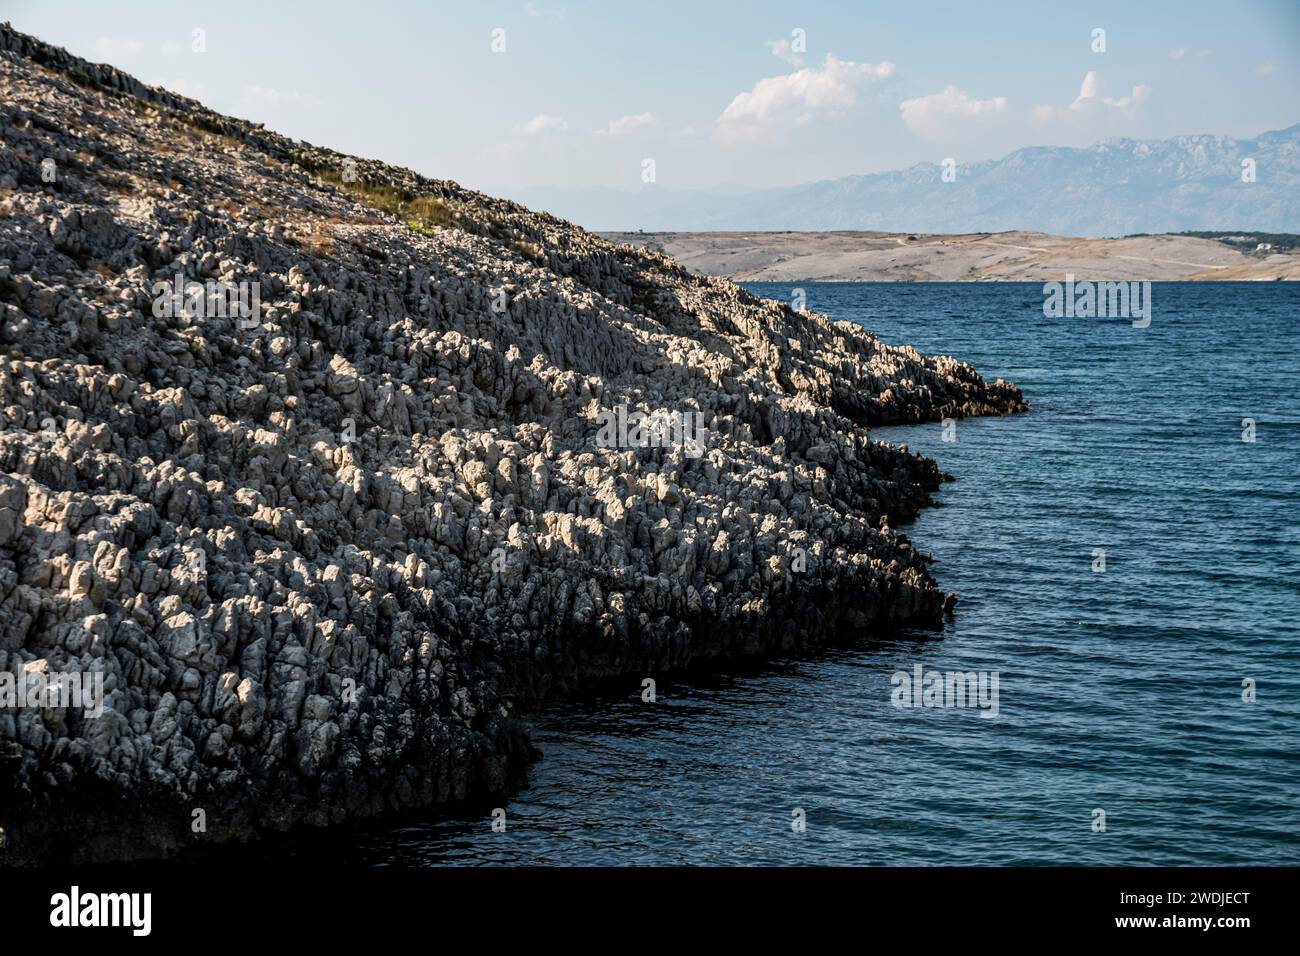 Hilly dalmatian coast of the Adriatic Sea near the city of Vrsi in Croatia Stock Photo